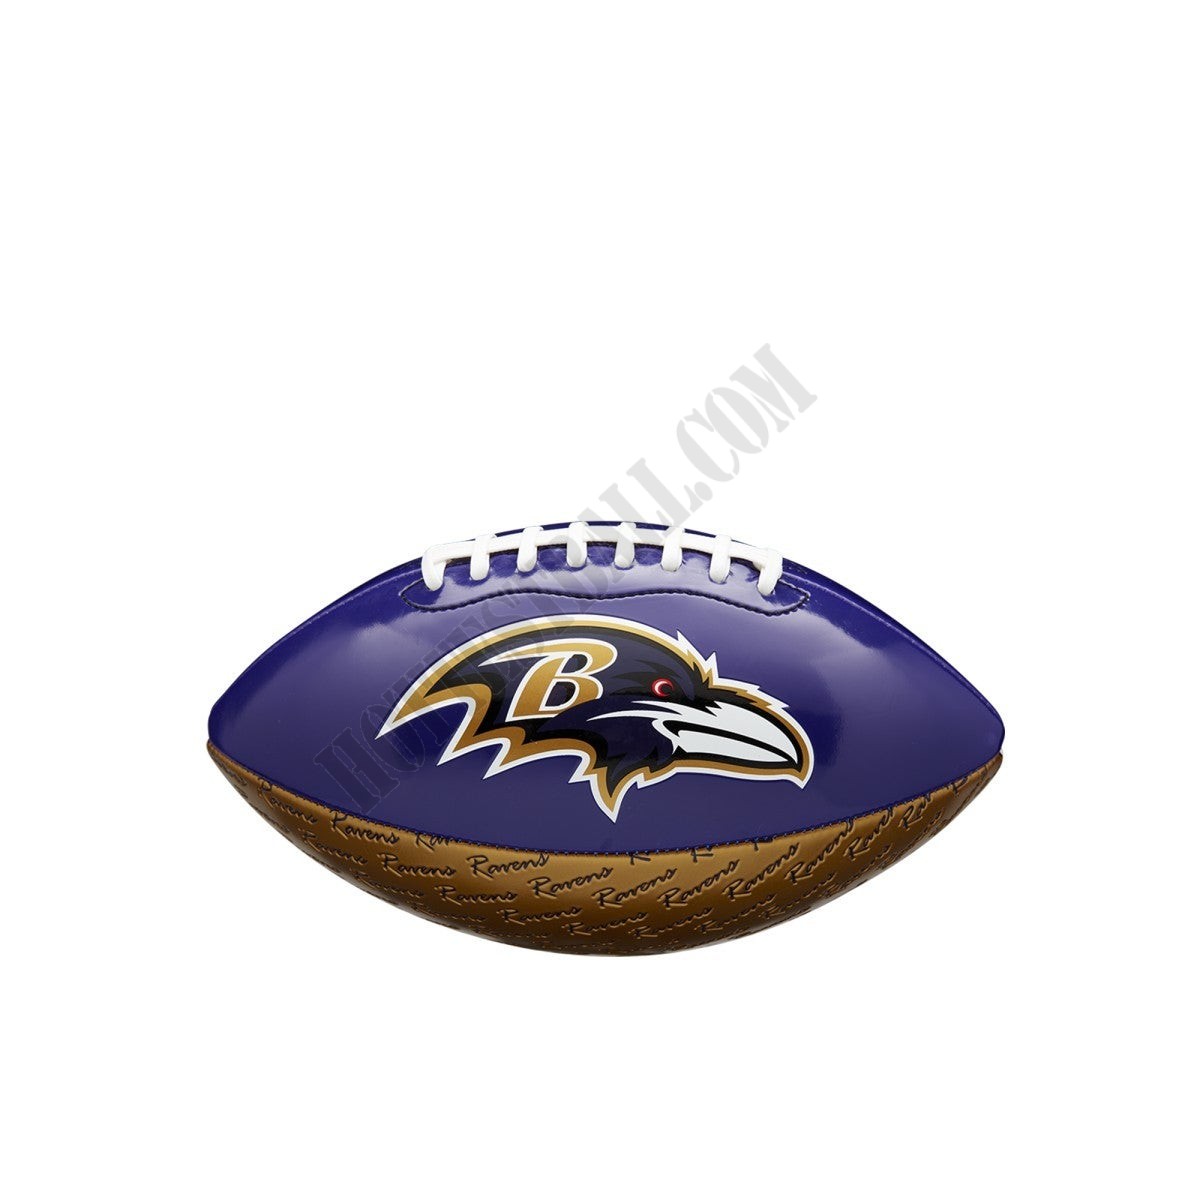 NFL City Pride Football - Baltimore Ravens ● Wilson Promotions - NFL City Pride Football - Baltimore Ravens ● Wilson Promotions